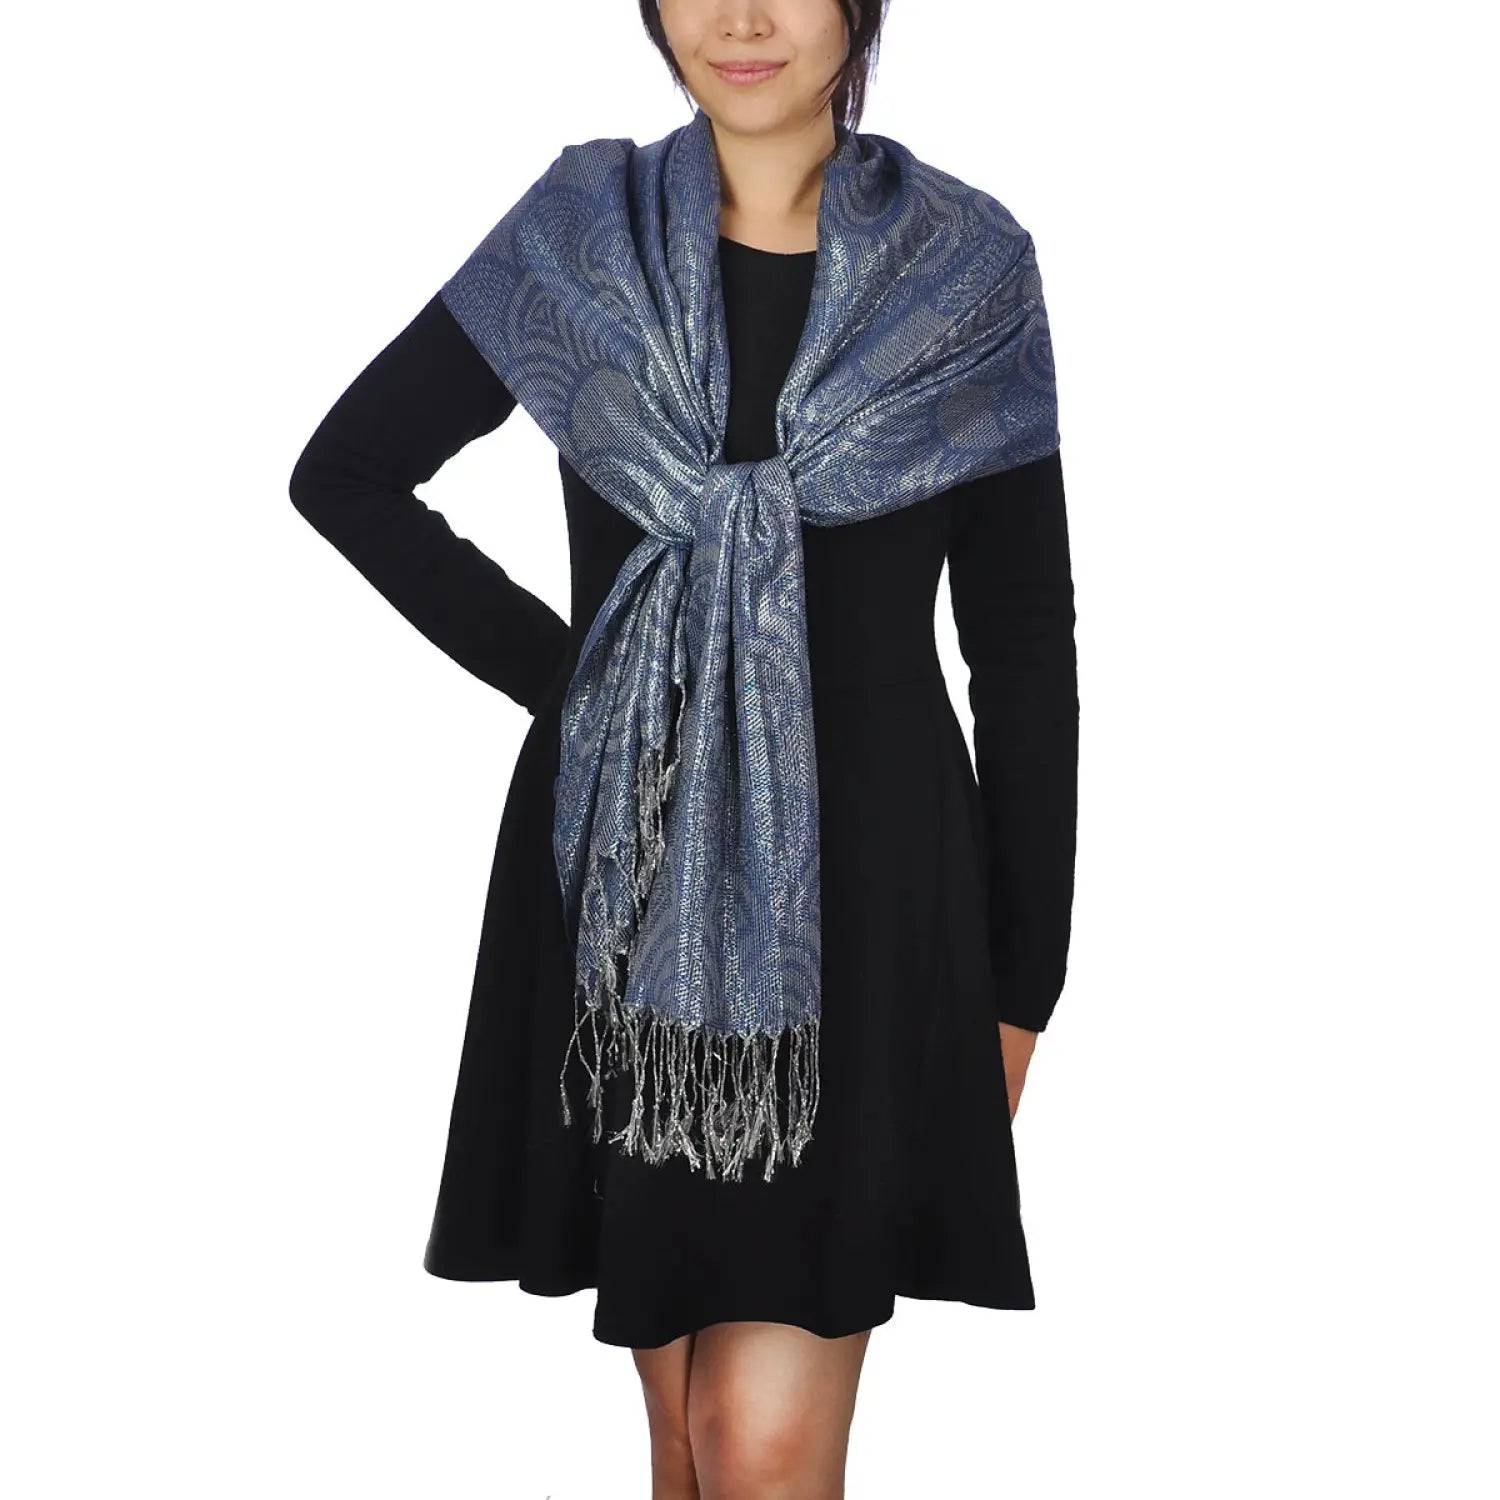 Woman wearing blue scarf from Metallic Aztec Print Oversized Tasselled Scarf